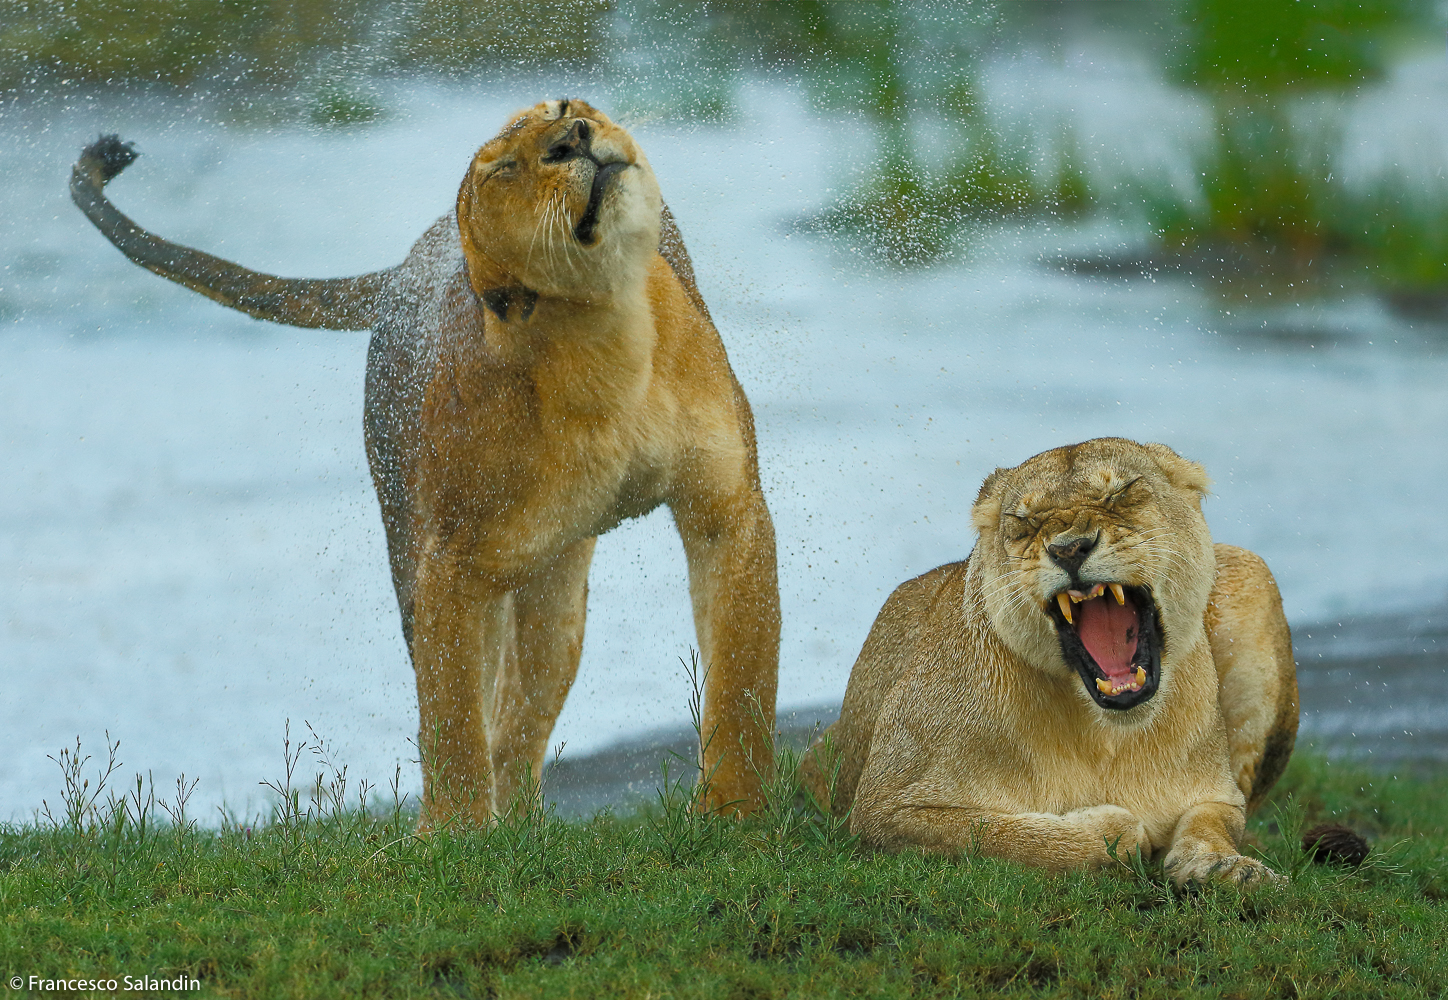 Lionesses in the rain...